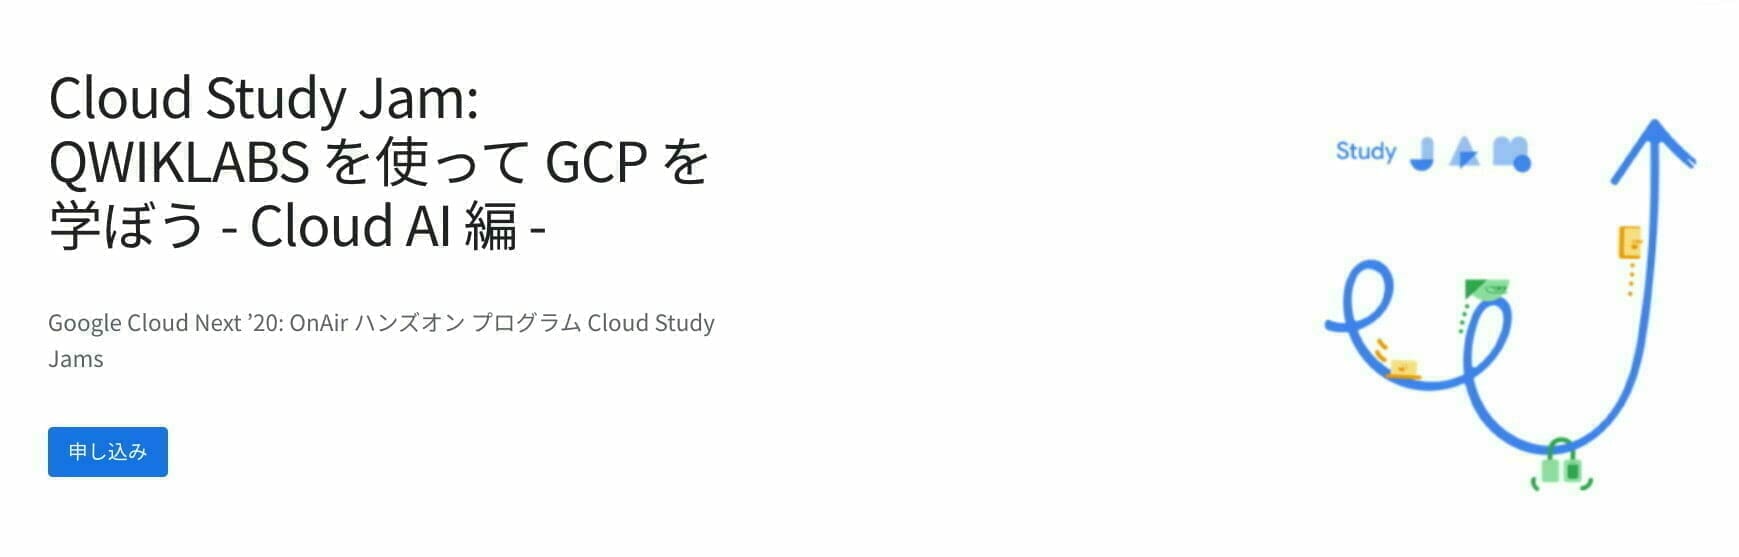 Cloud Study Jam: QWIKLABS を使って GCP を学ぼう - Cloud AI 編 -